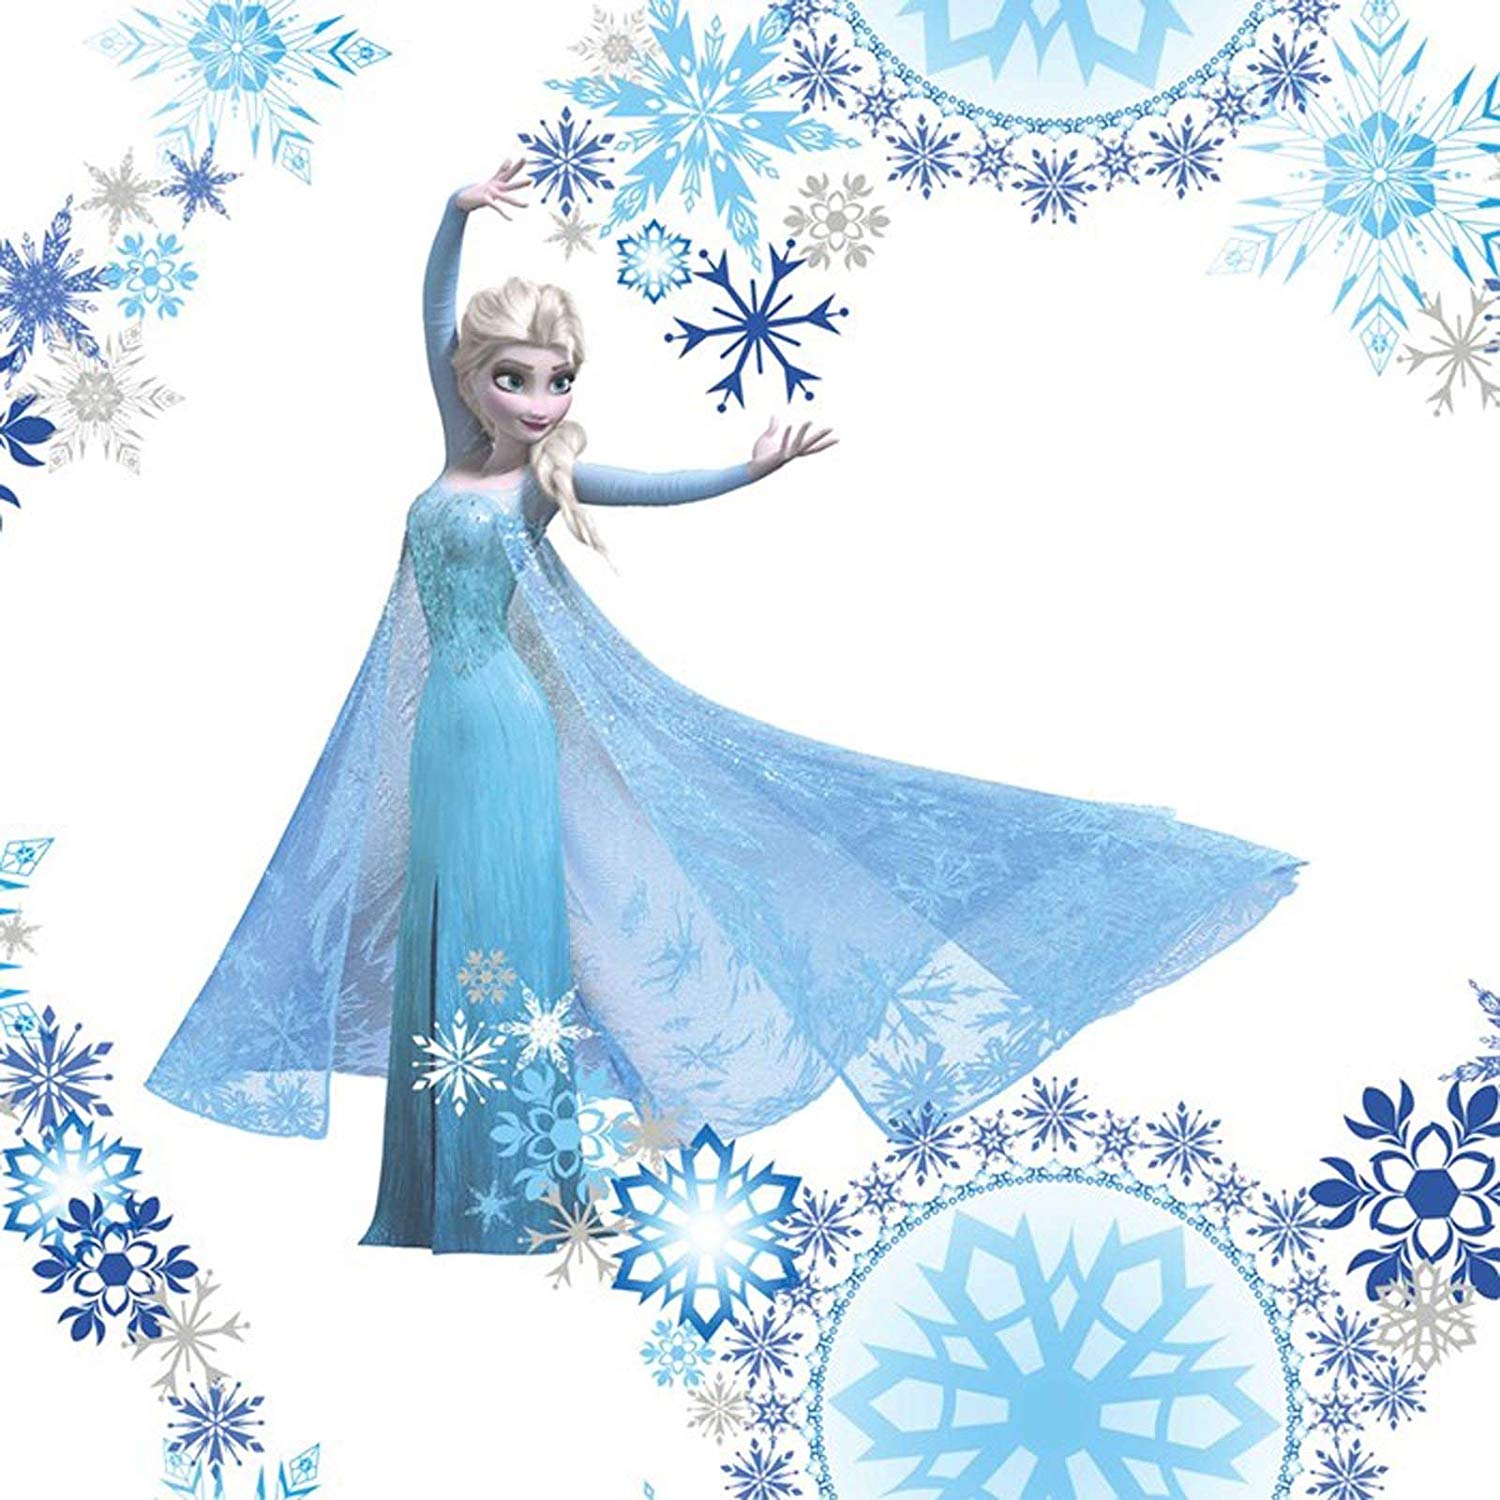 frozen wallpaper,snowflake,graphics,clip art,illustration,winter